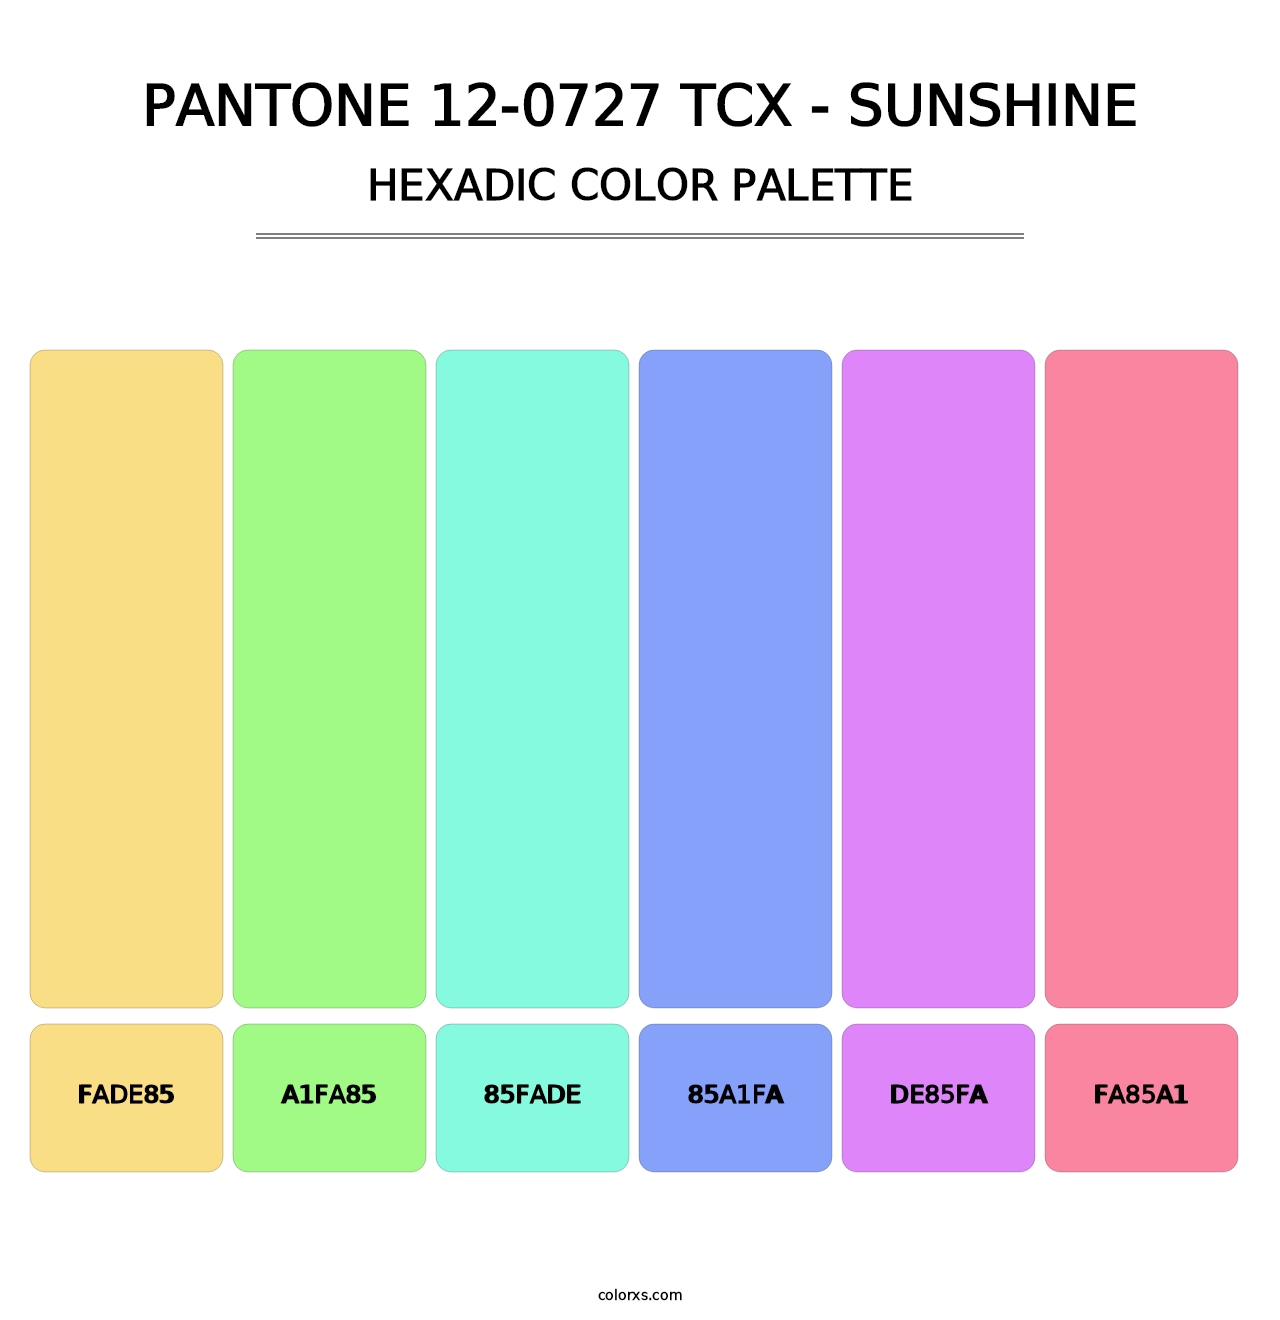 PANTONE 12-0727 TCX - Sunshine - Hexadic Color Palette